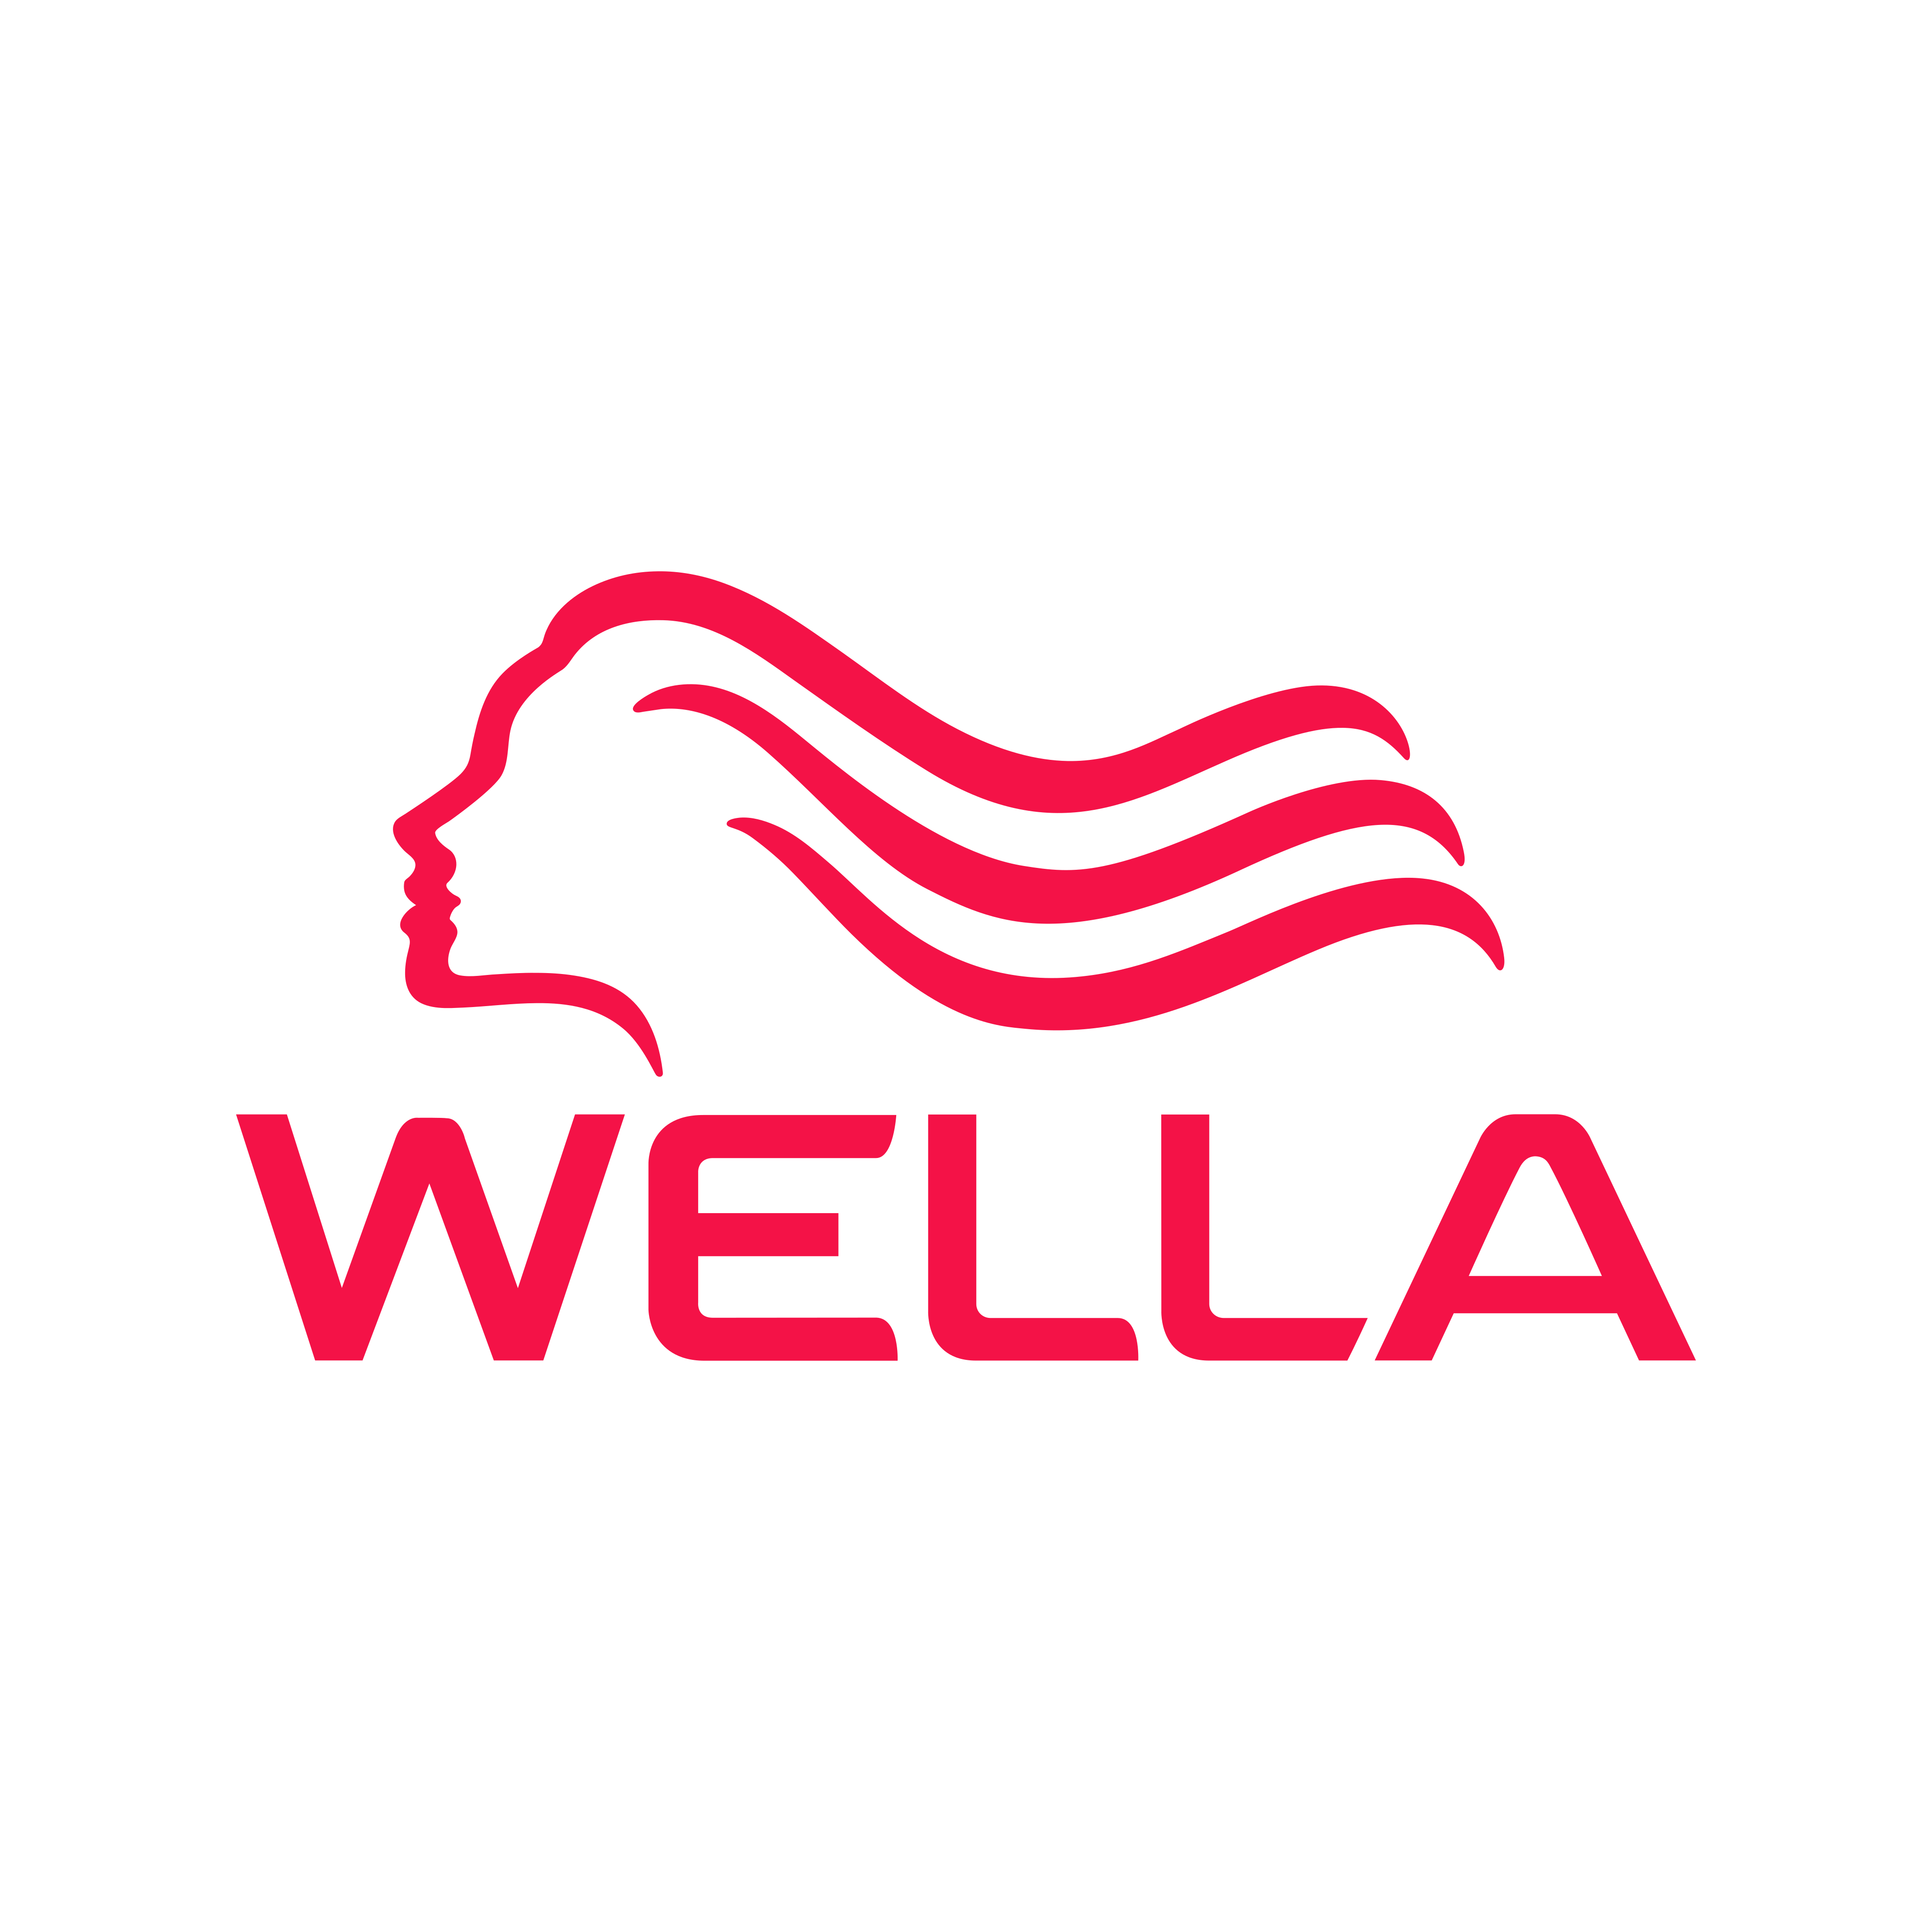 wella logo 0 - Wella Logo